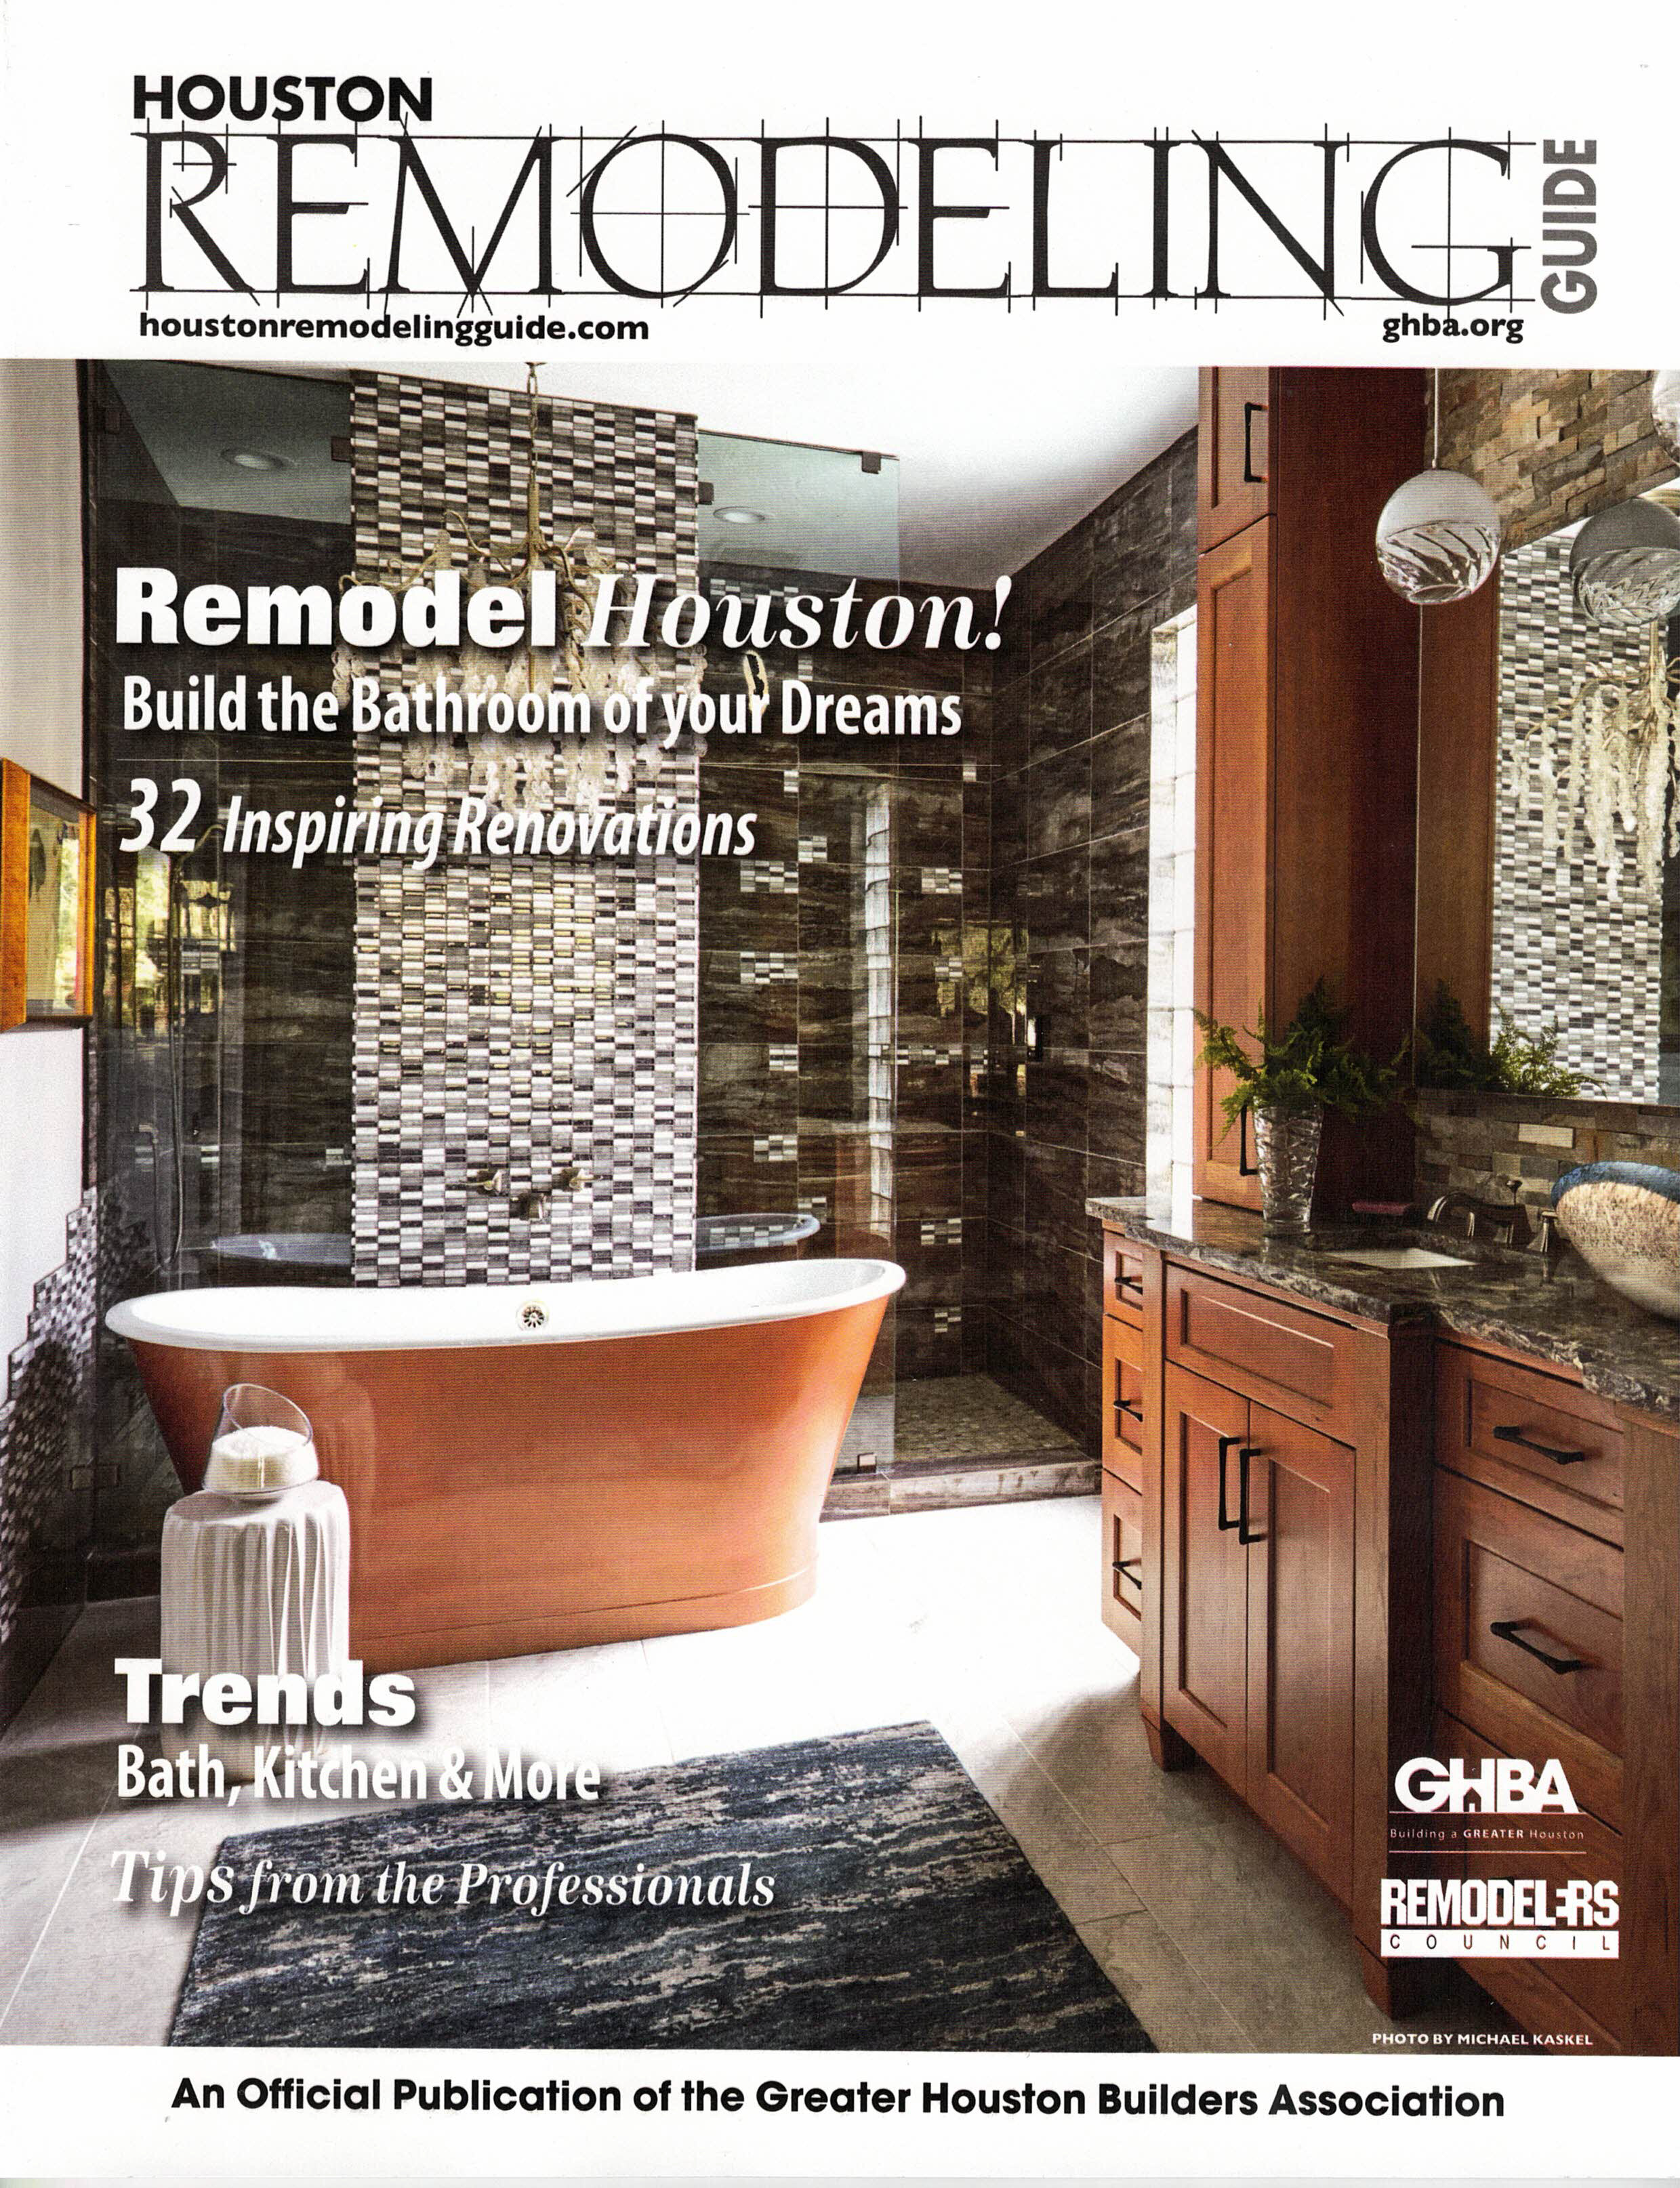 Houston Remodeling Guide - Build the Bathroom 1- cover.jpg